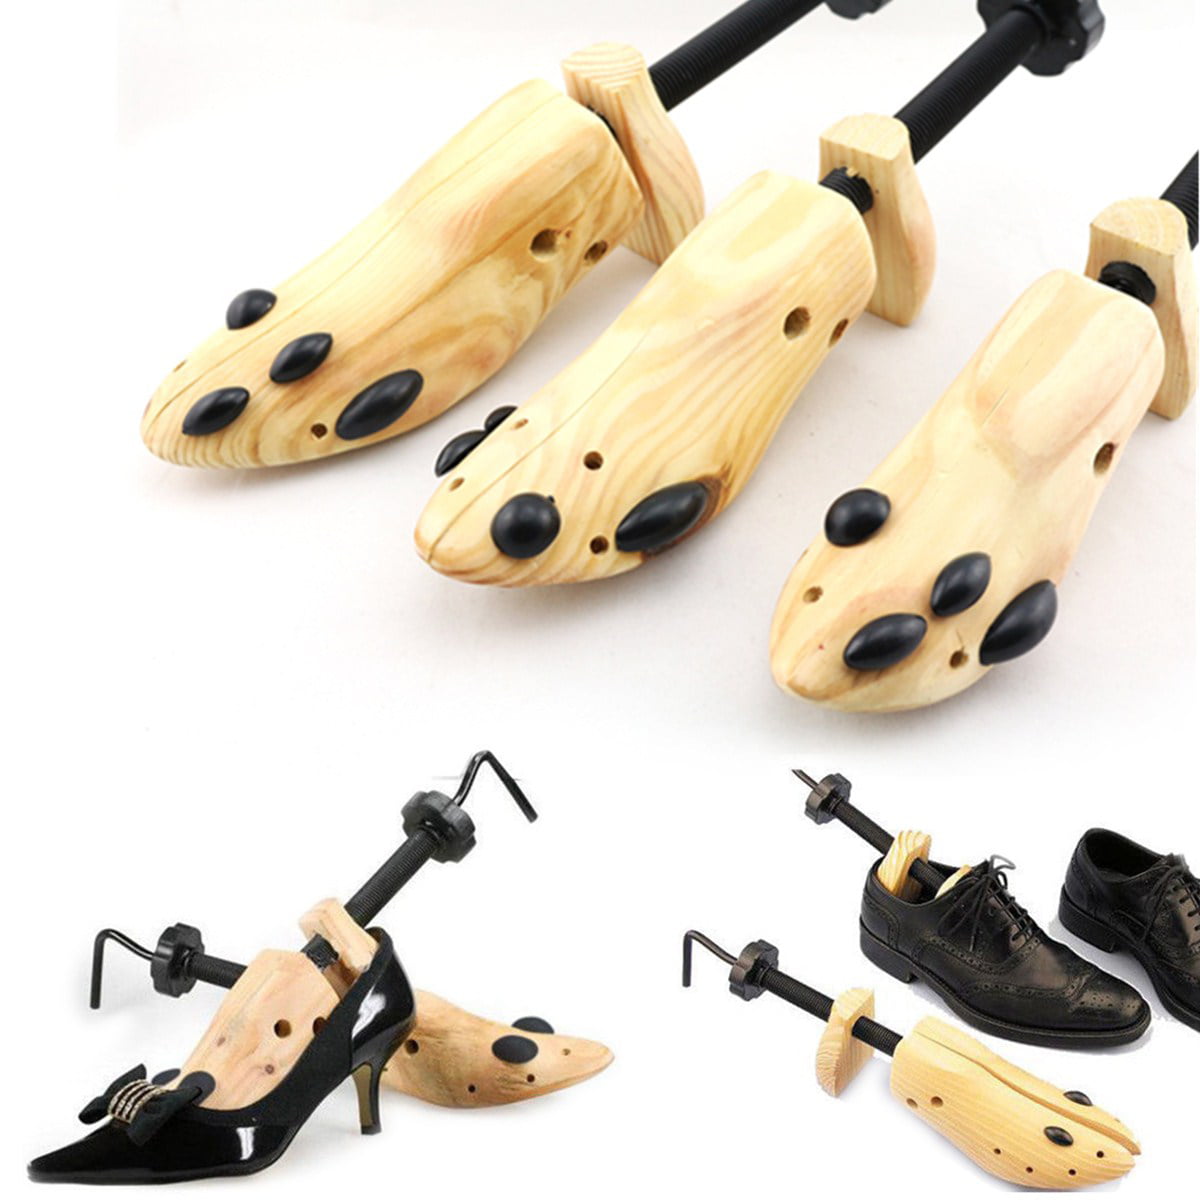 Pair of Professional 2-way Wooden Adjustable Shoe Stretcher for Men/Women 5-10 